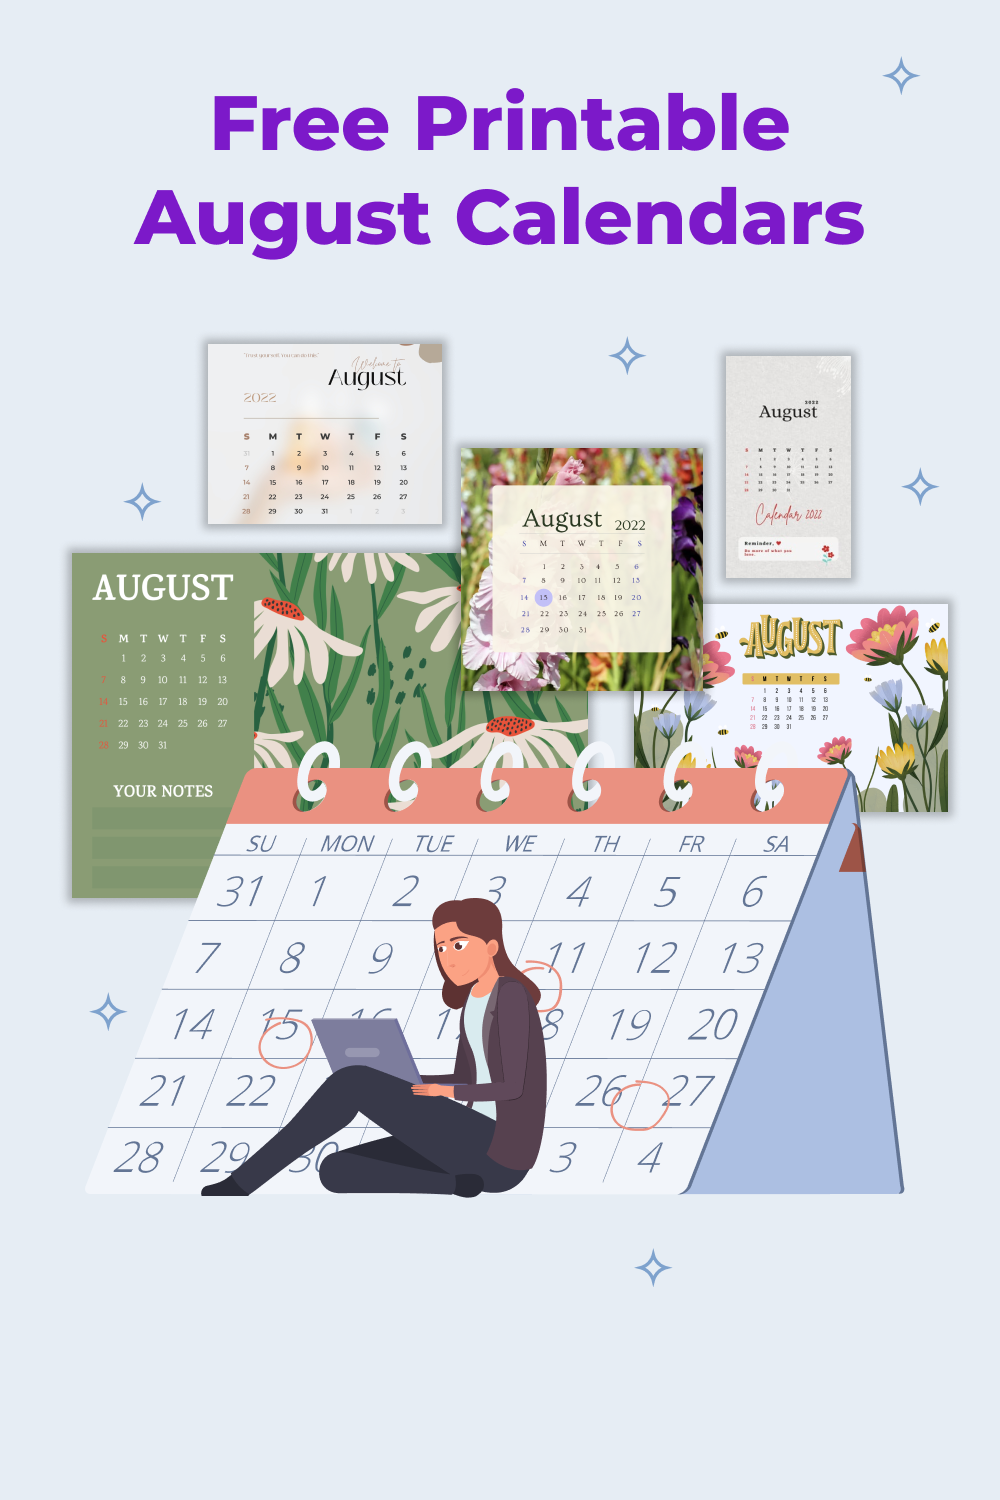 free printable august calendars pinterest.